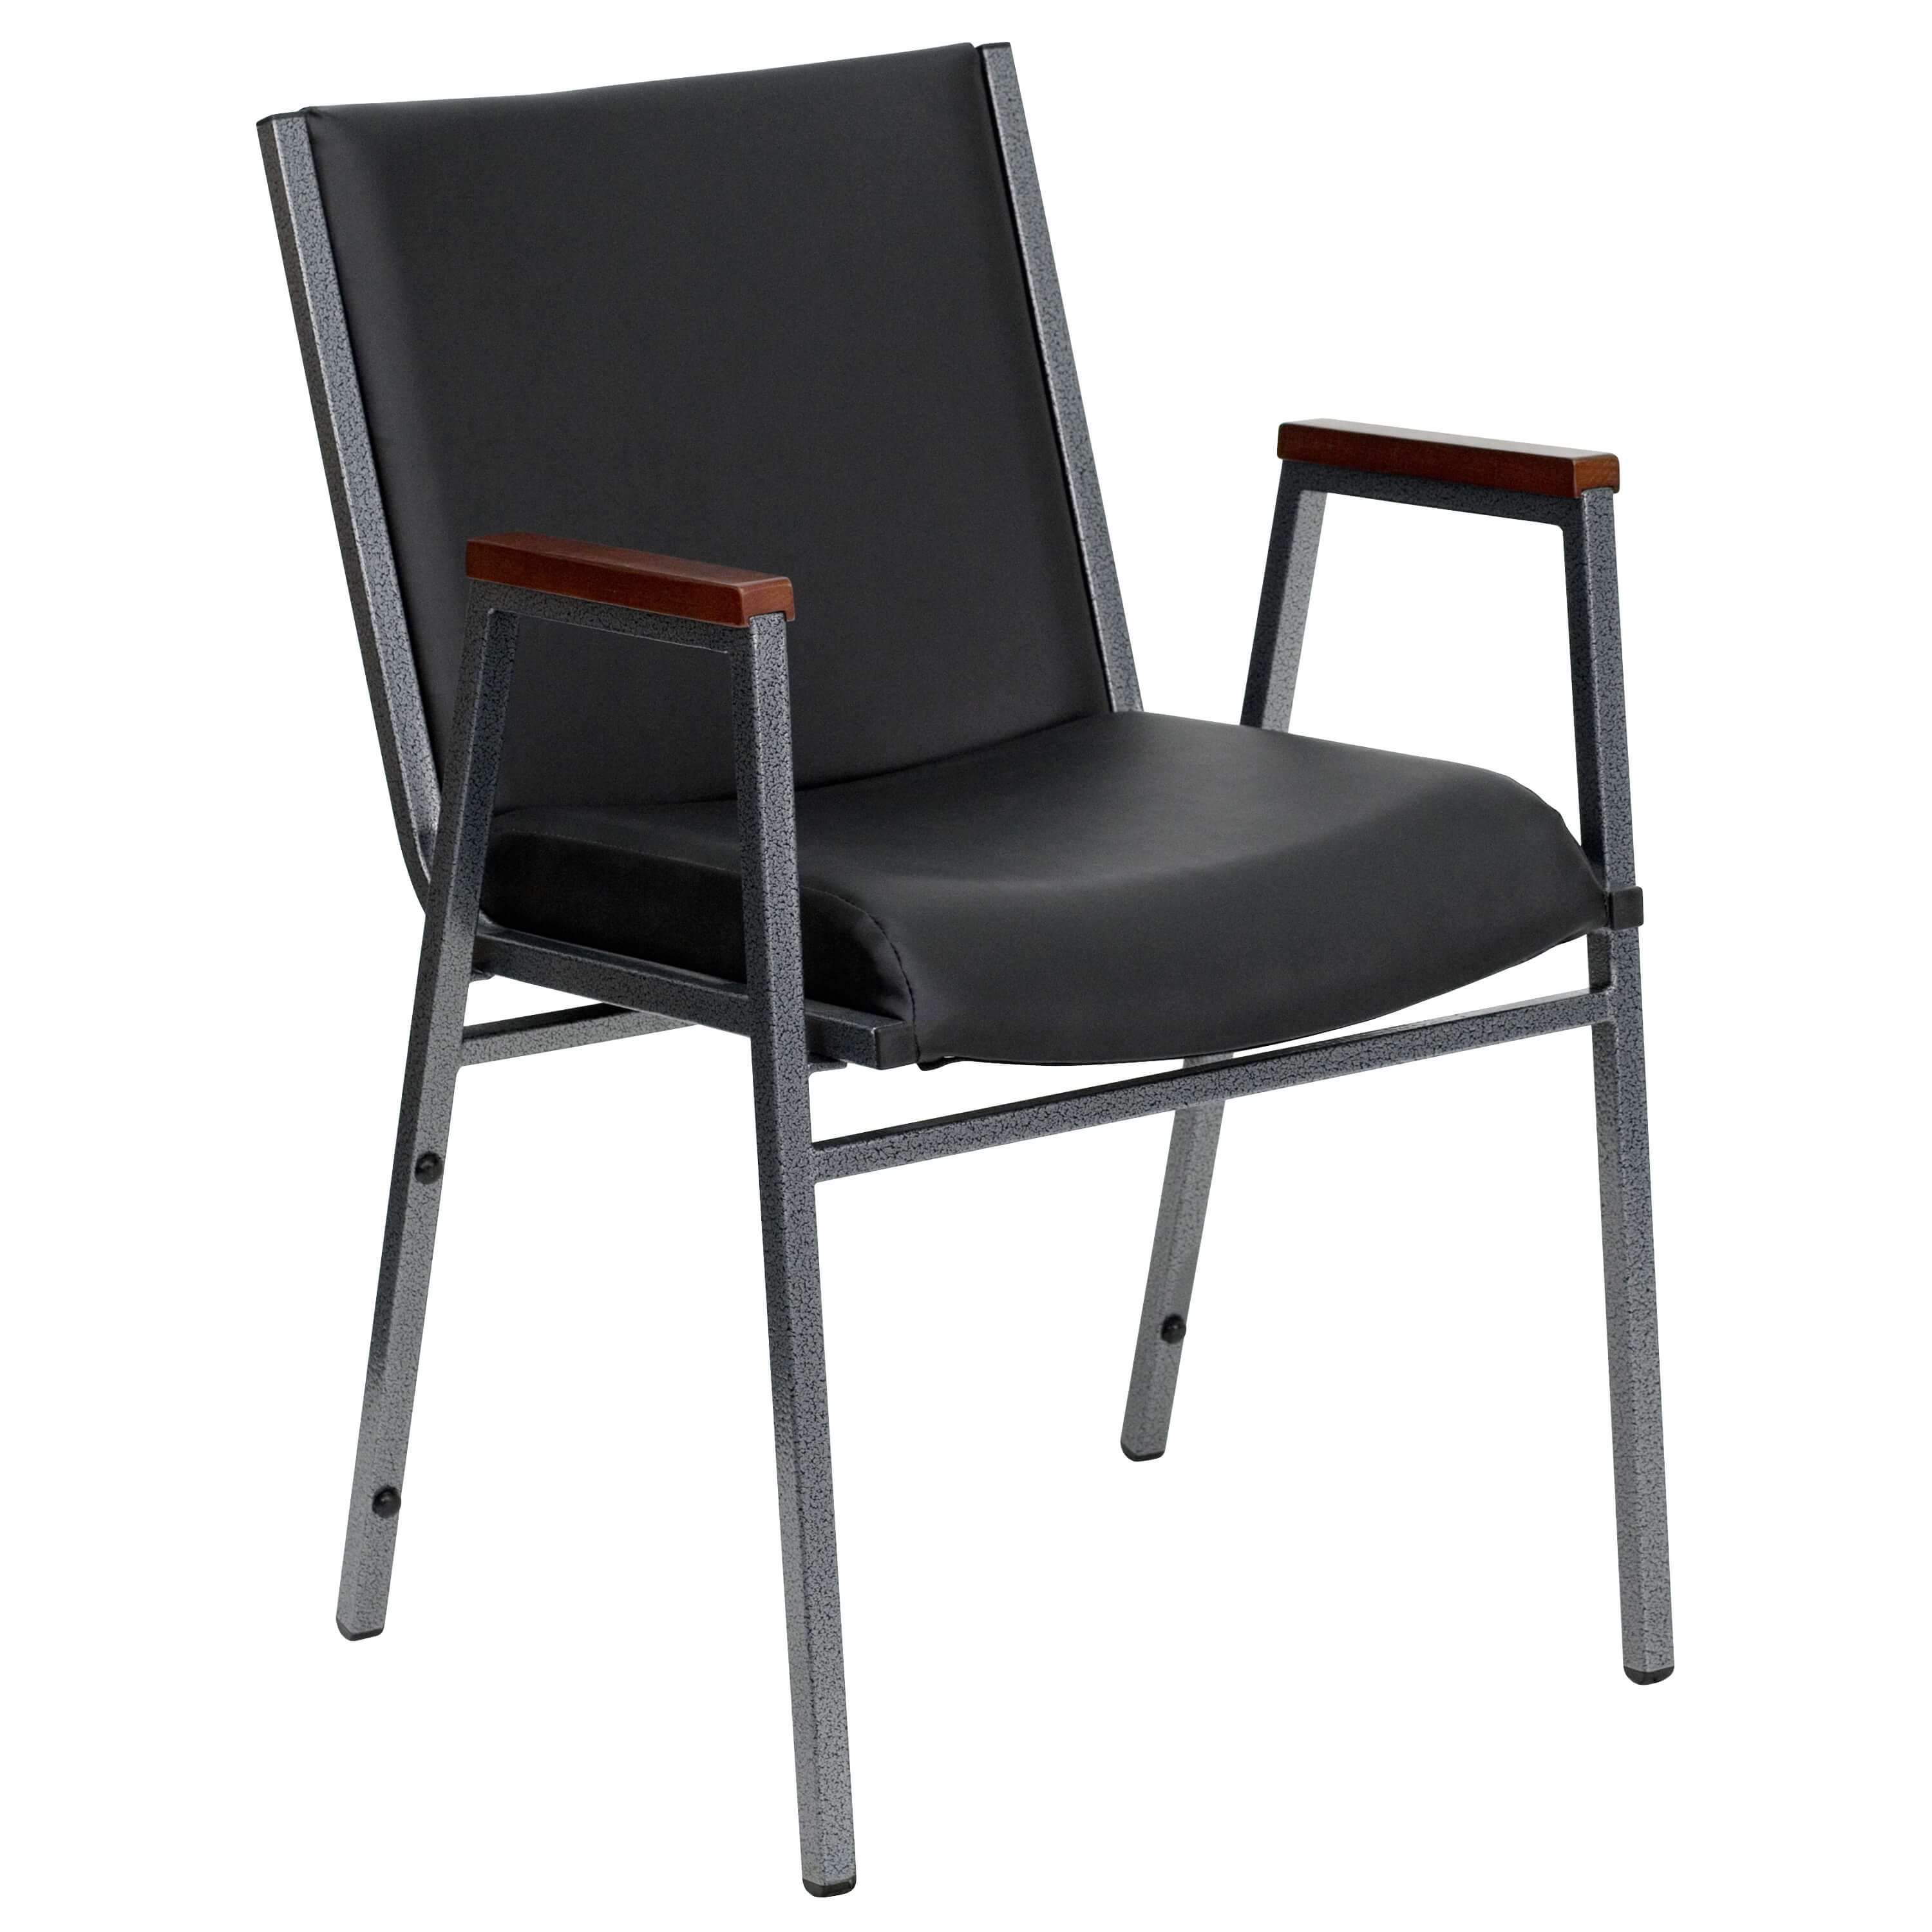 Stackable chairs CUB XU 60154 BK VYL GG FLA